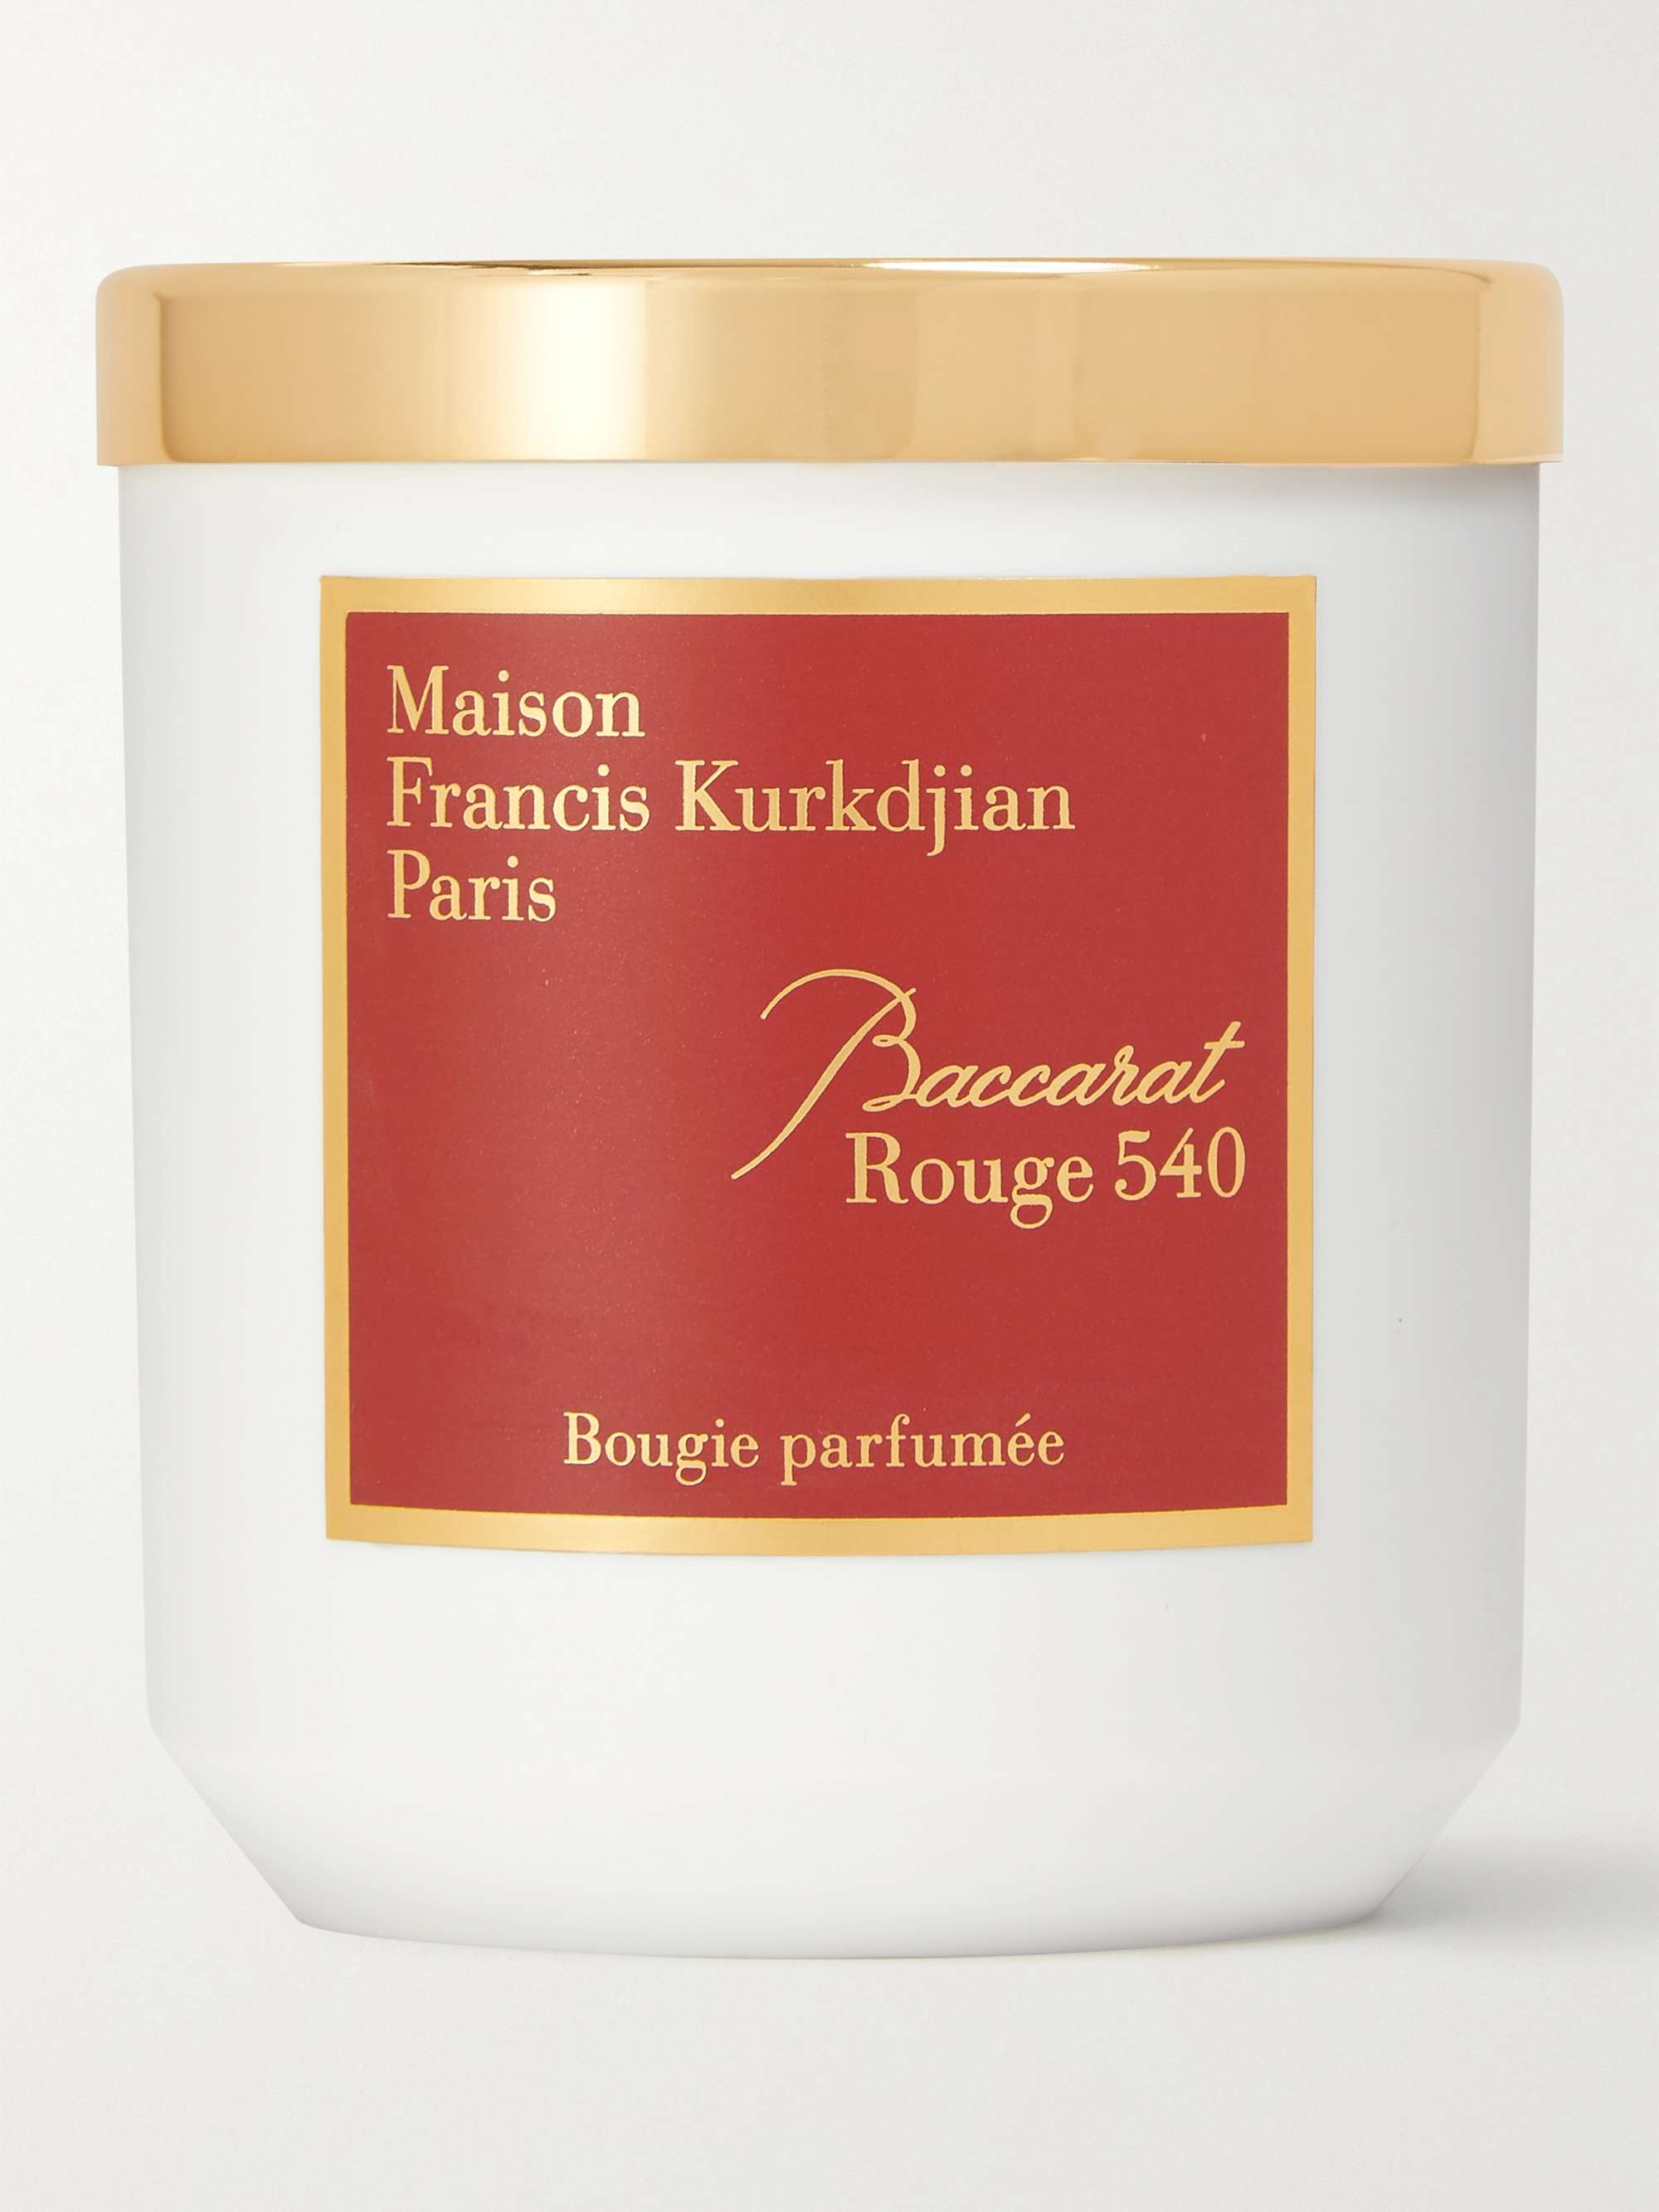 MAISON FRANCIS KURKDJIAN Baccarat Rouge 540 Scented Candle, 280g